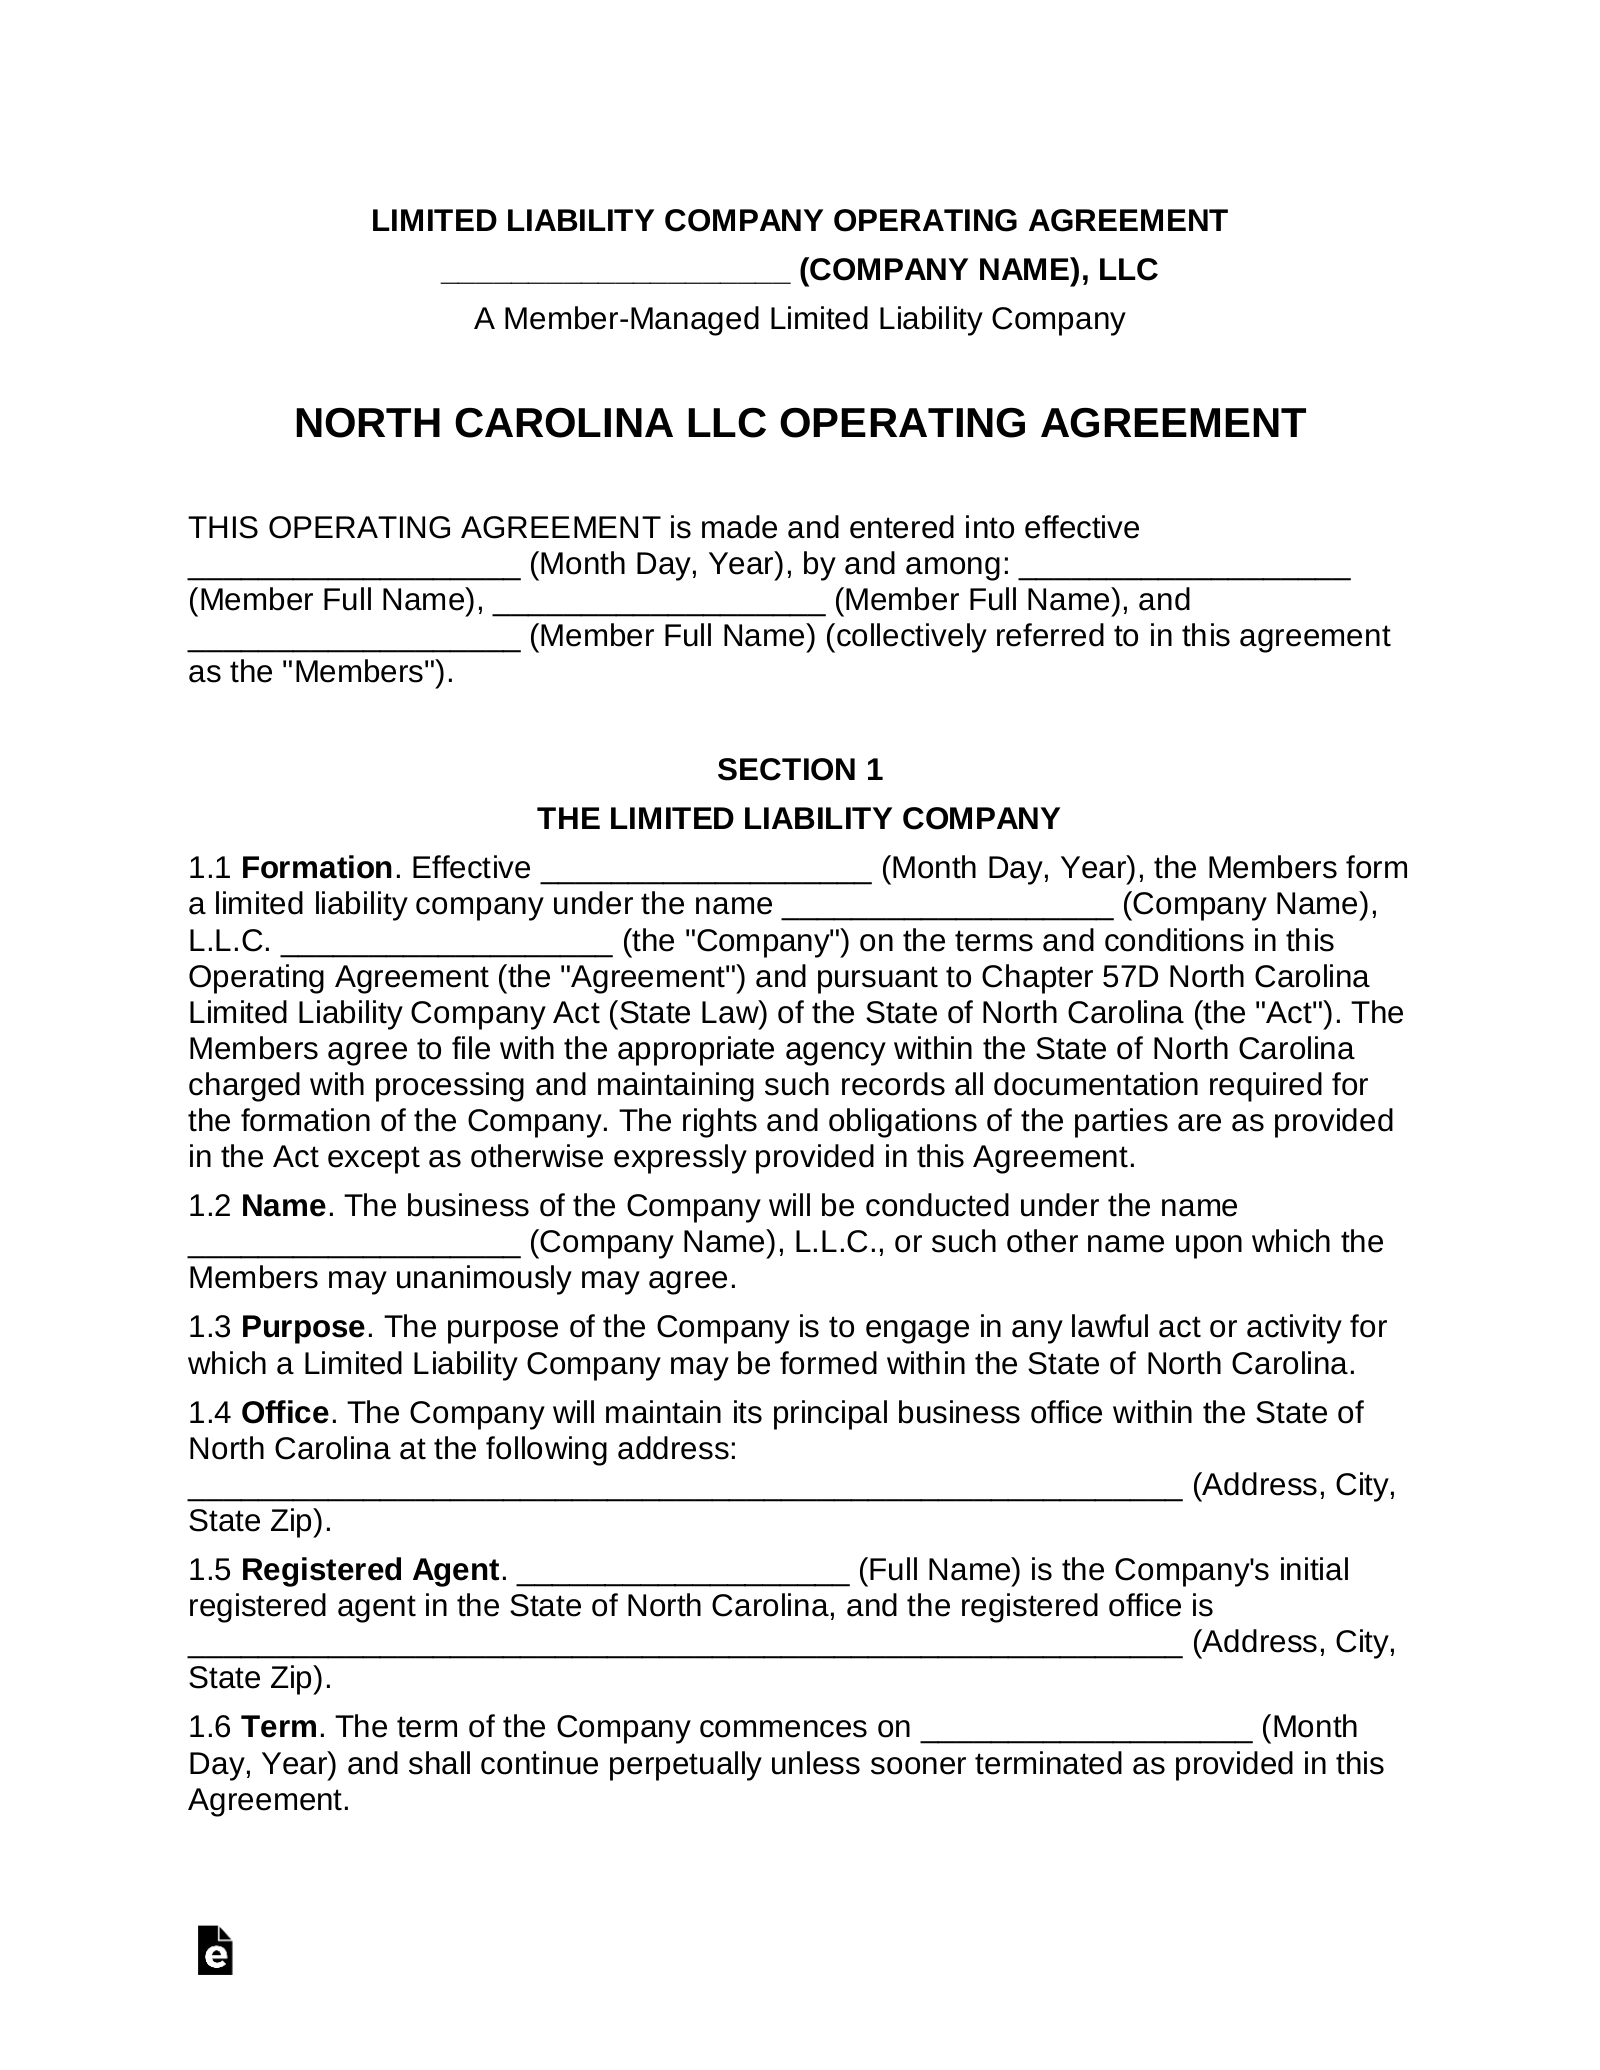 North Carolina Multi-Member LLC Operating Agreement Form